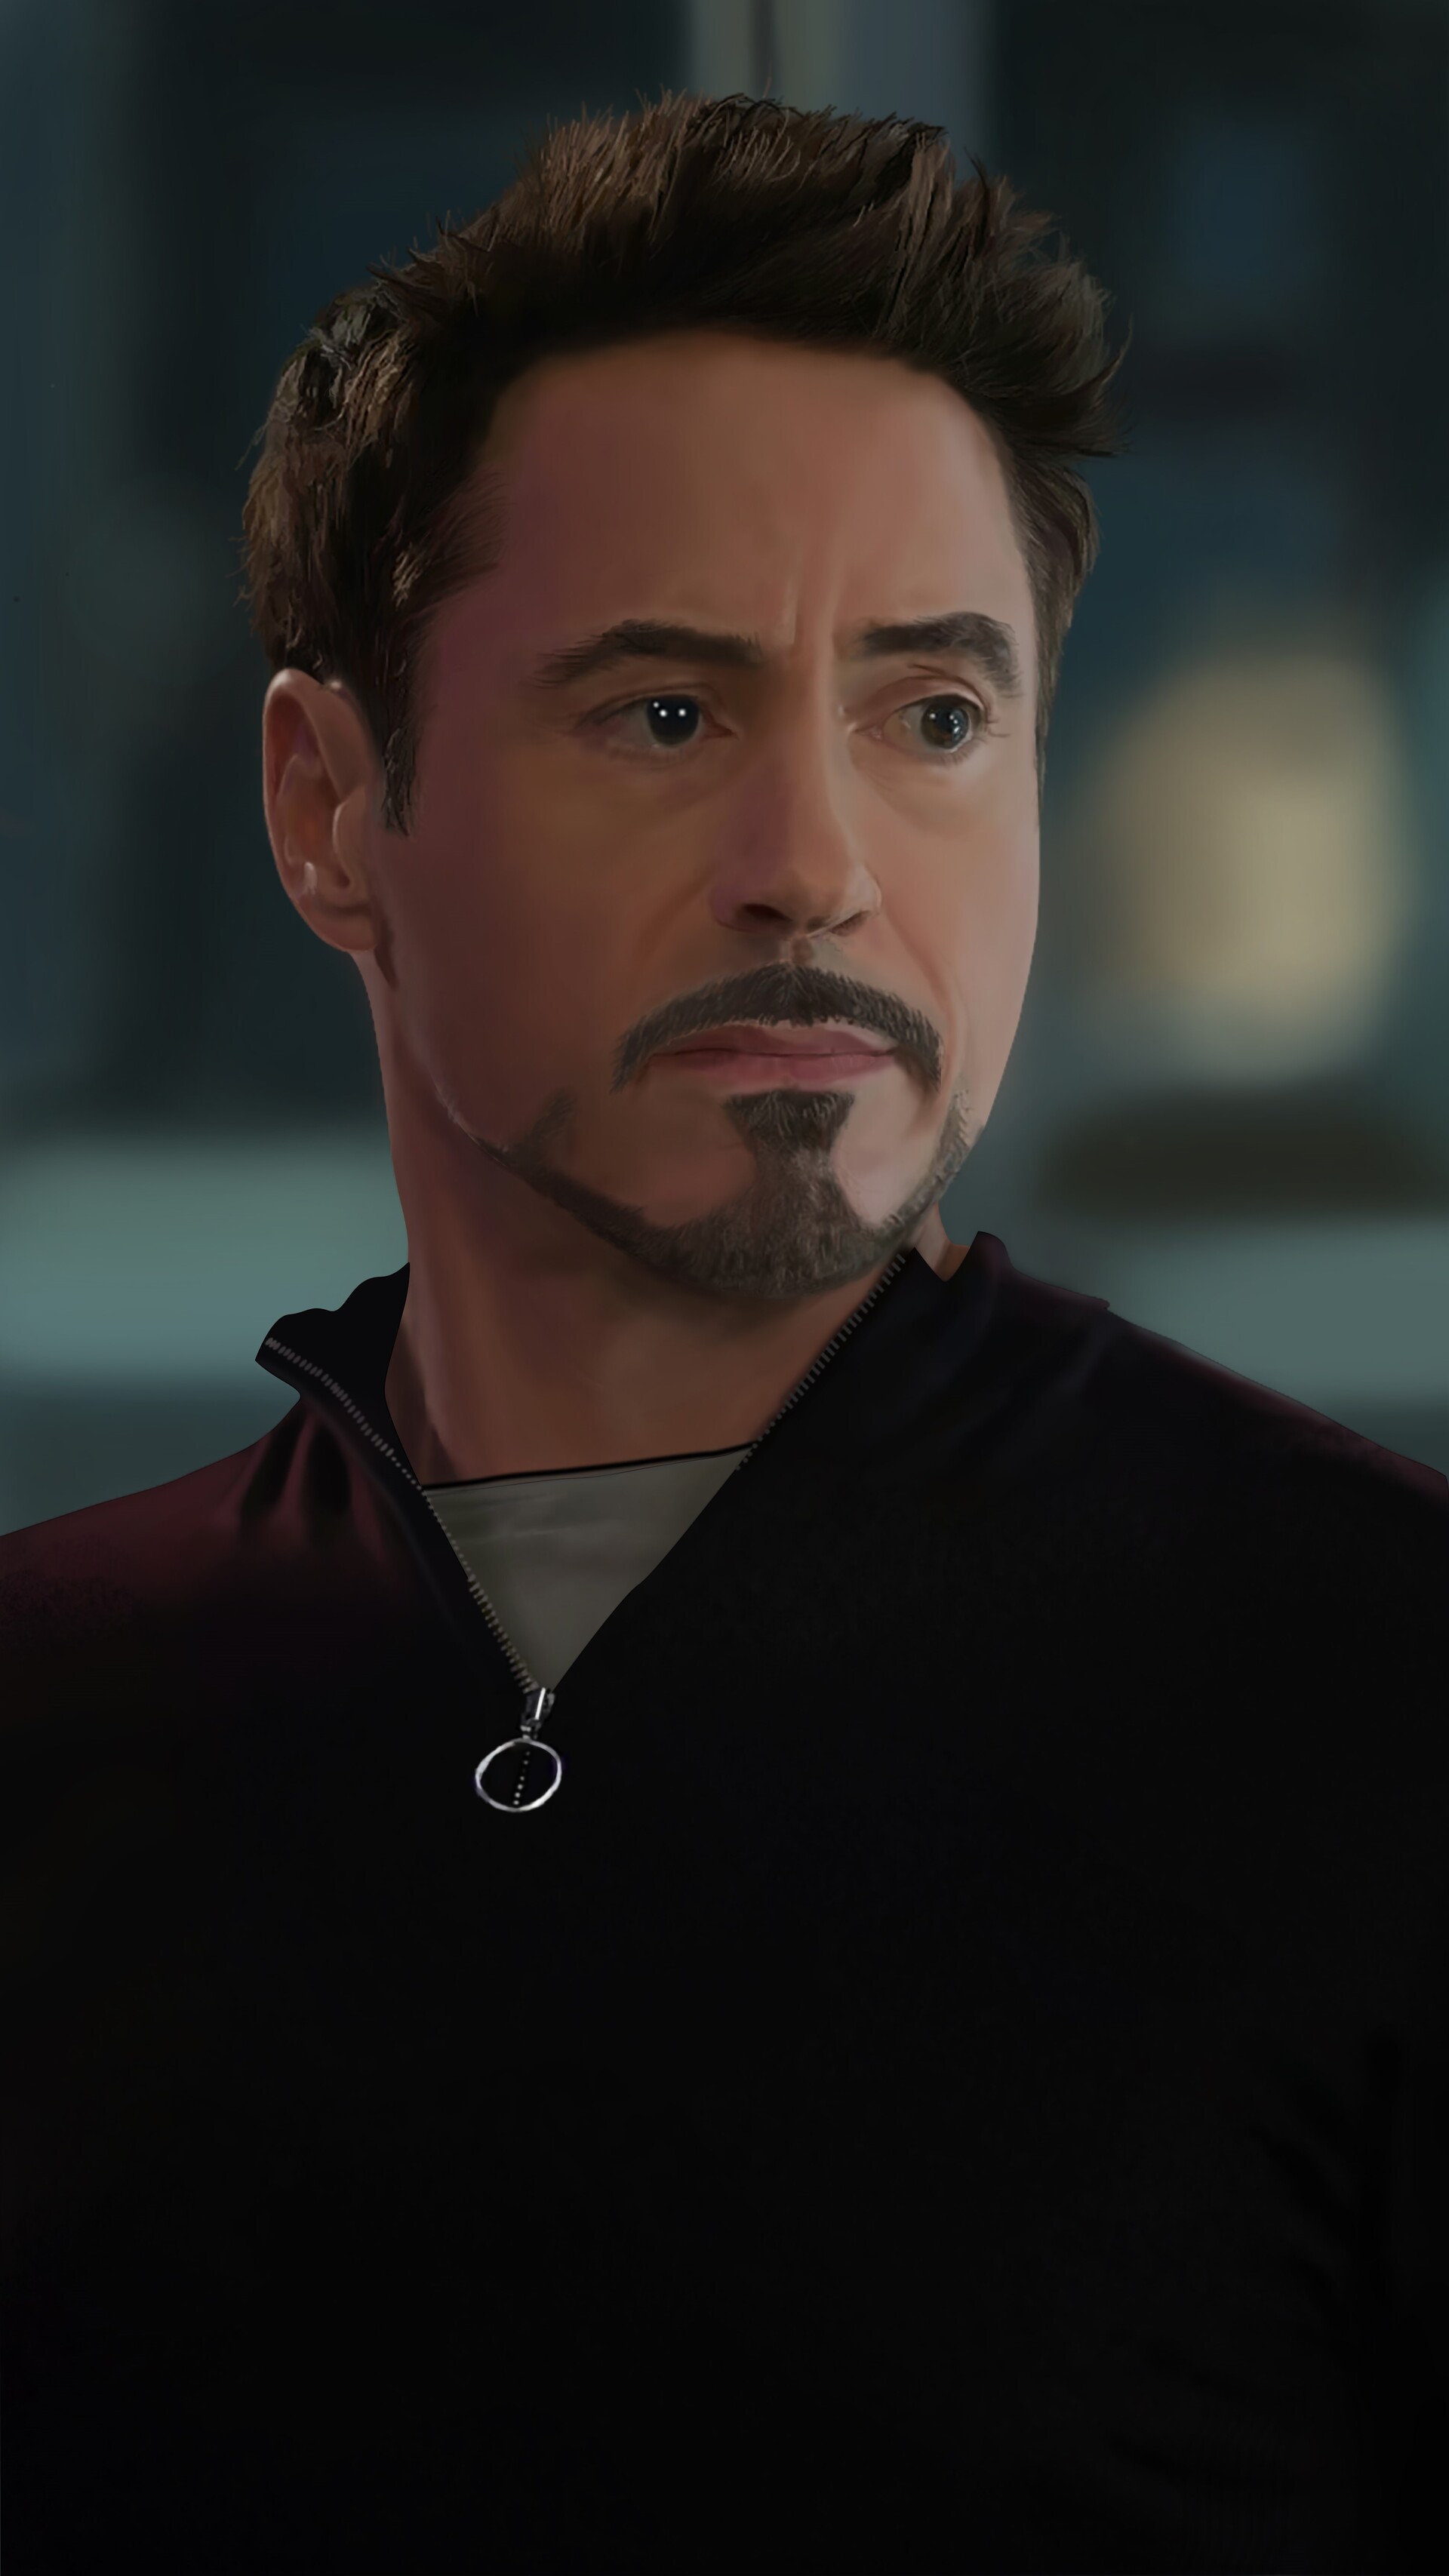 ArtStation - Digital Painting - Tony Stark